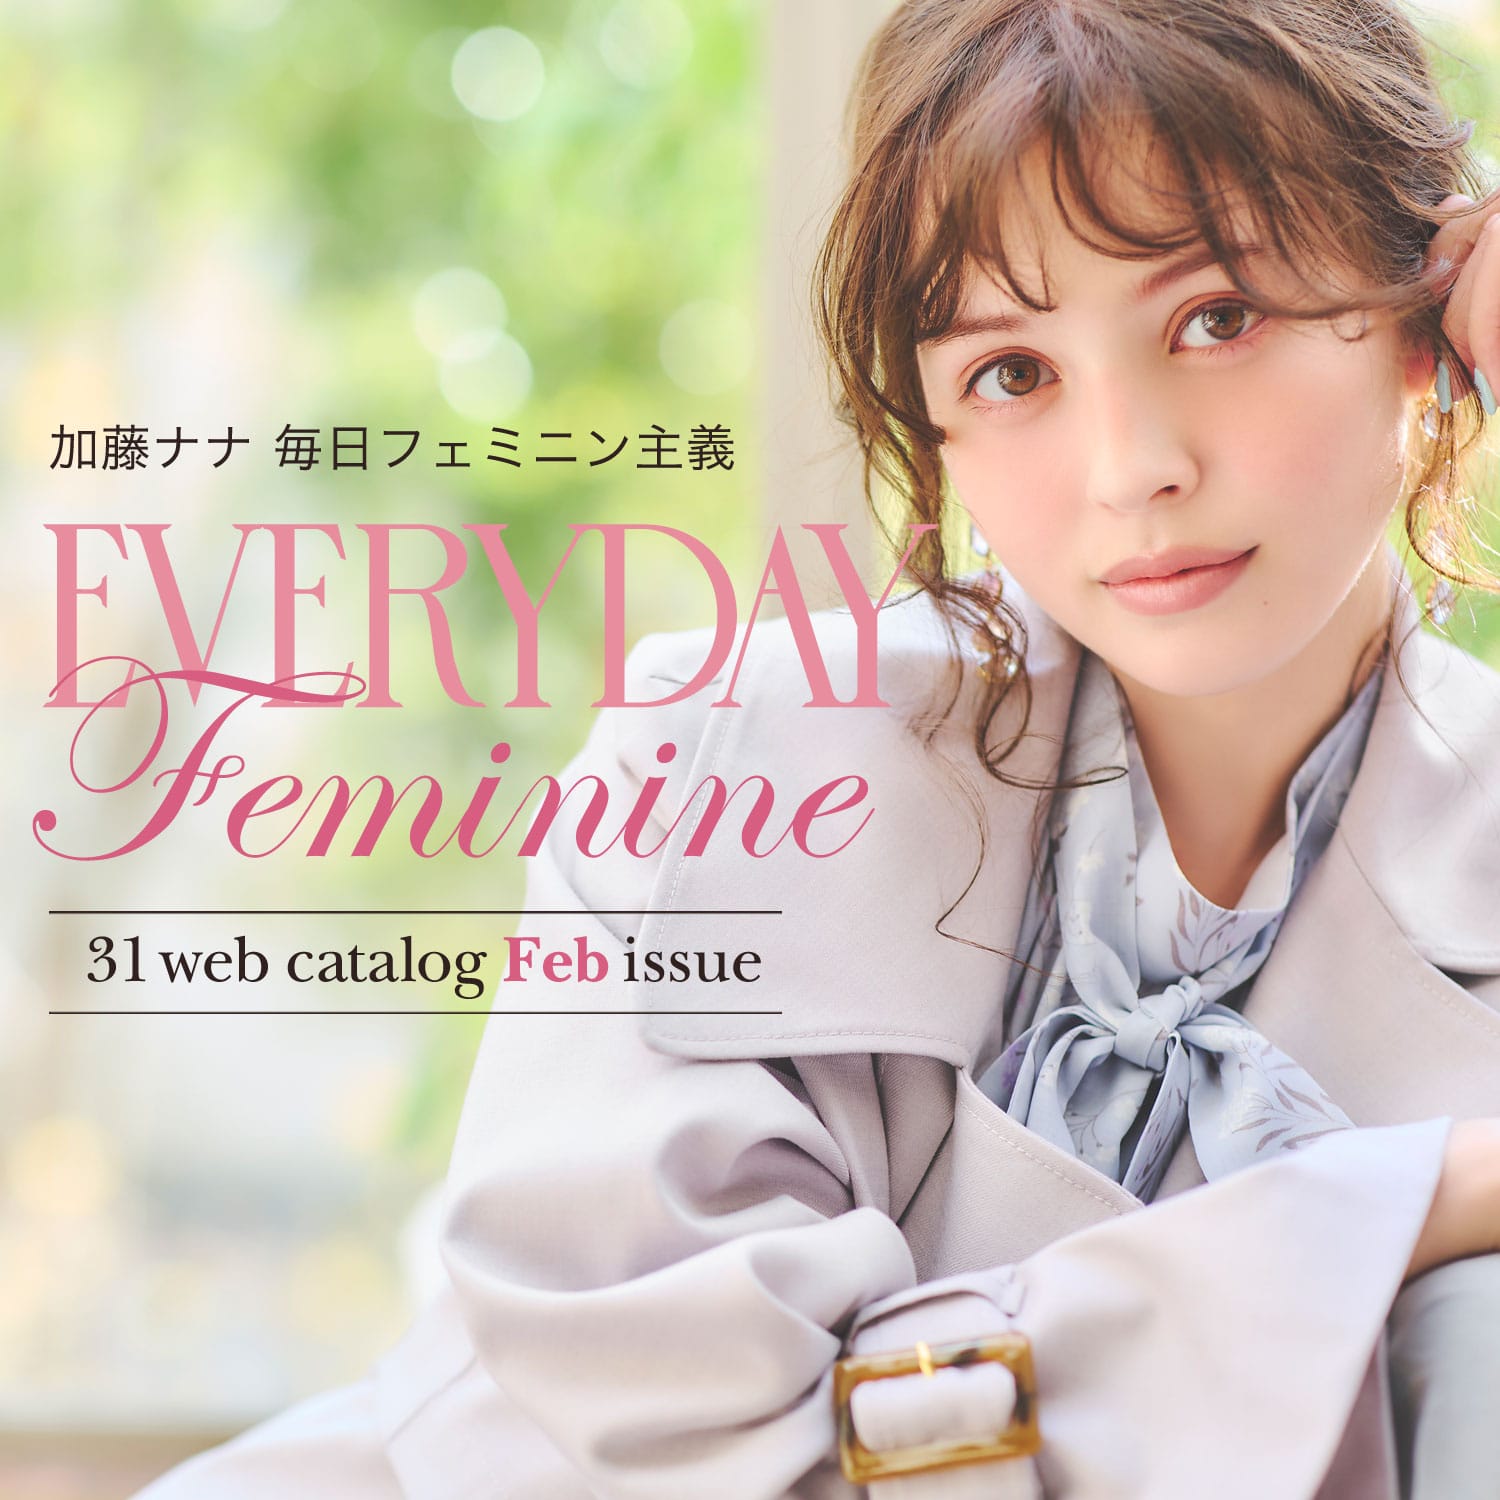 31 web catalog February 加藤ナナ毎日フェミニン主義